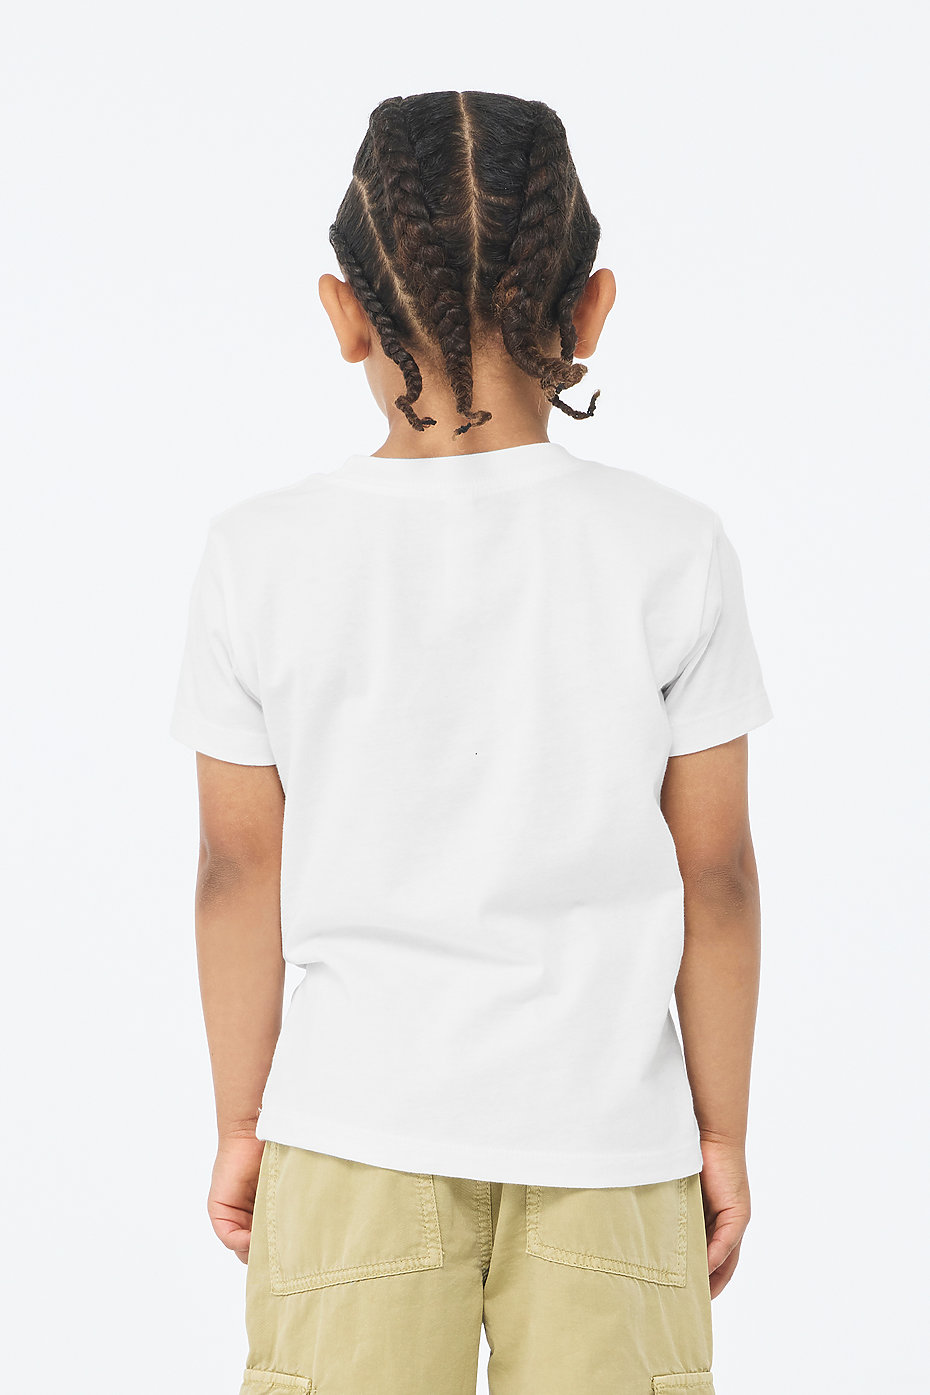 Wholesale Kids Clothing | Plain Blank Kids T Shirts | Kids Tee Shirts ...